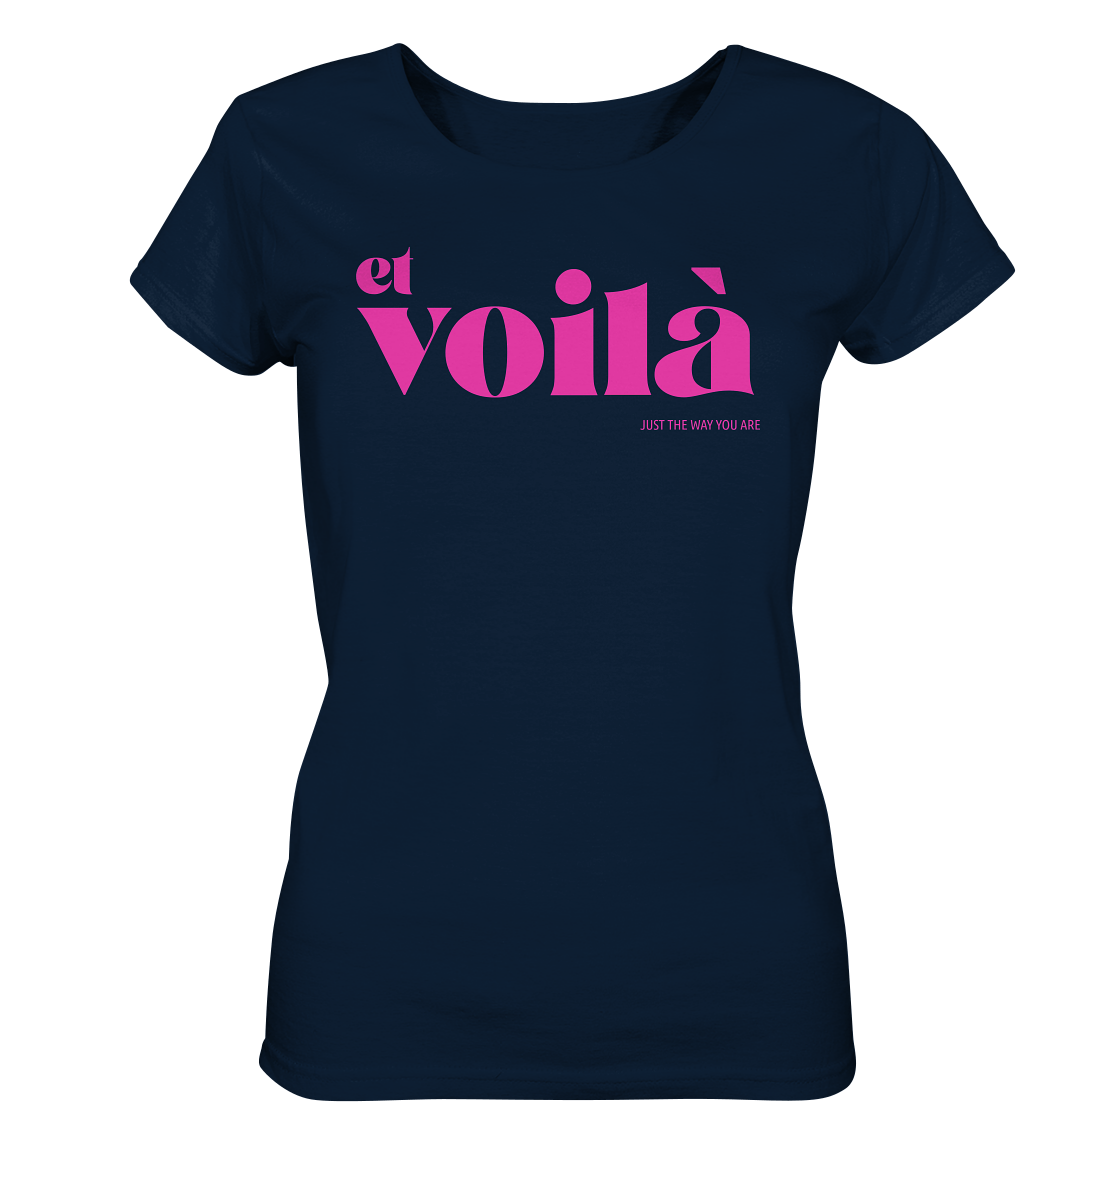 Et voilà Design. Trendiges Damen Shirt mit coolen Statement, Et voilà - Just the way you are shirt in blau lettering in pink